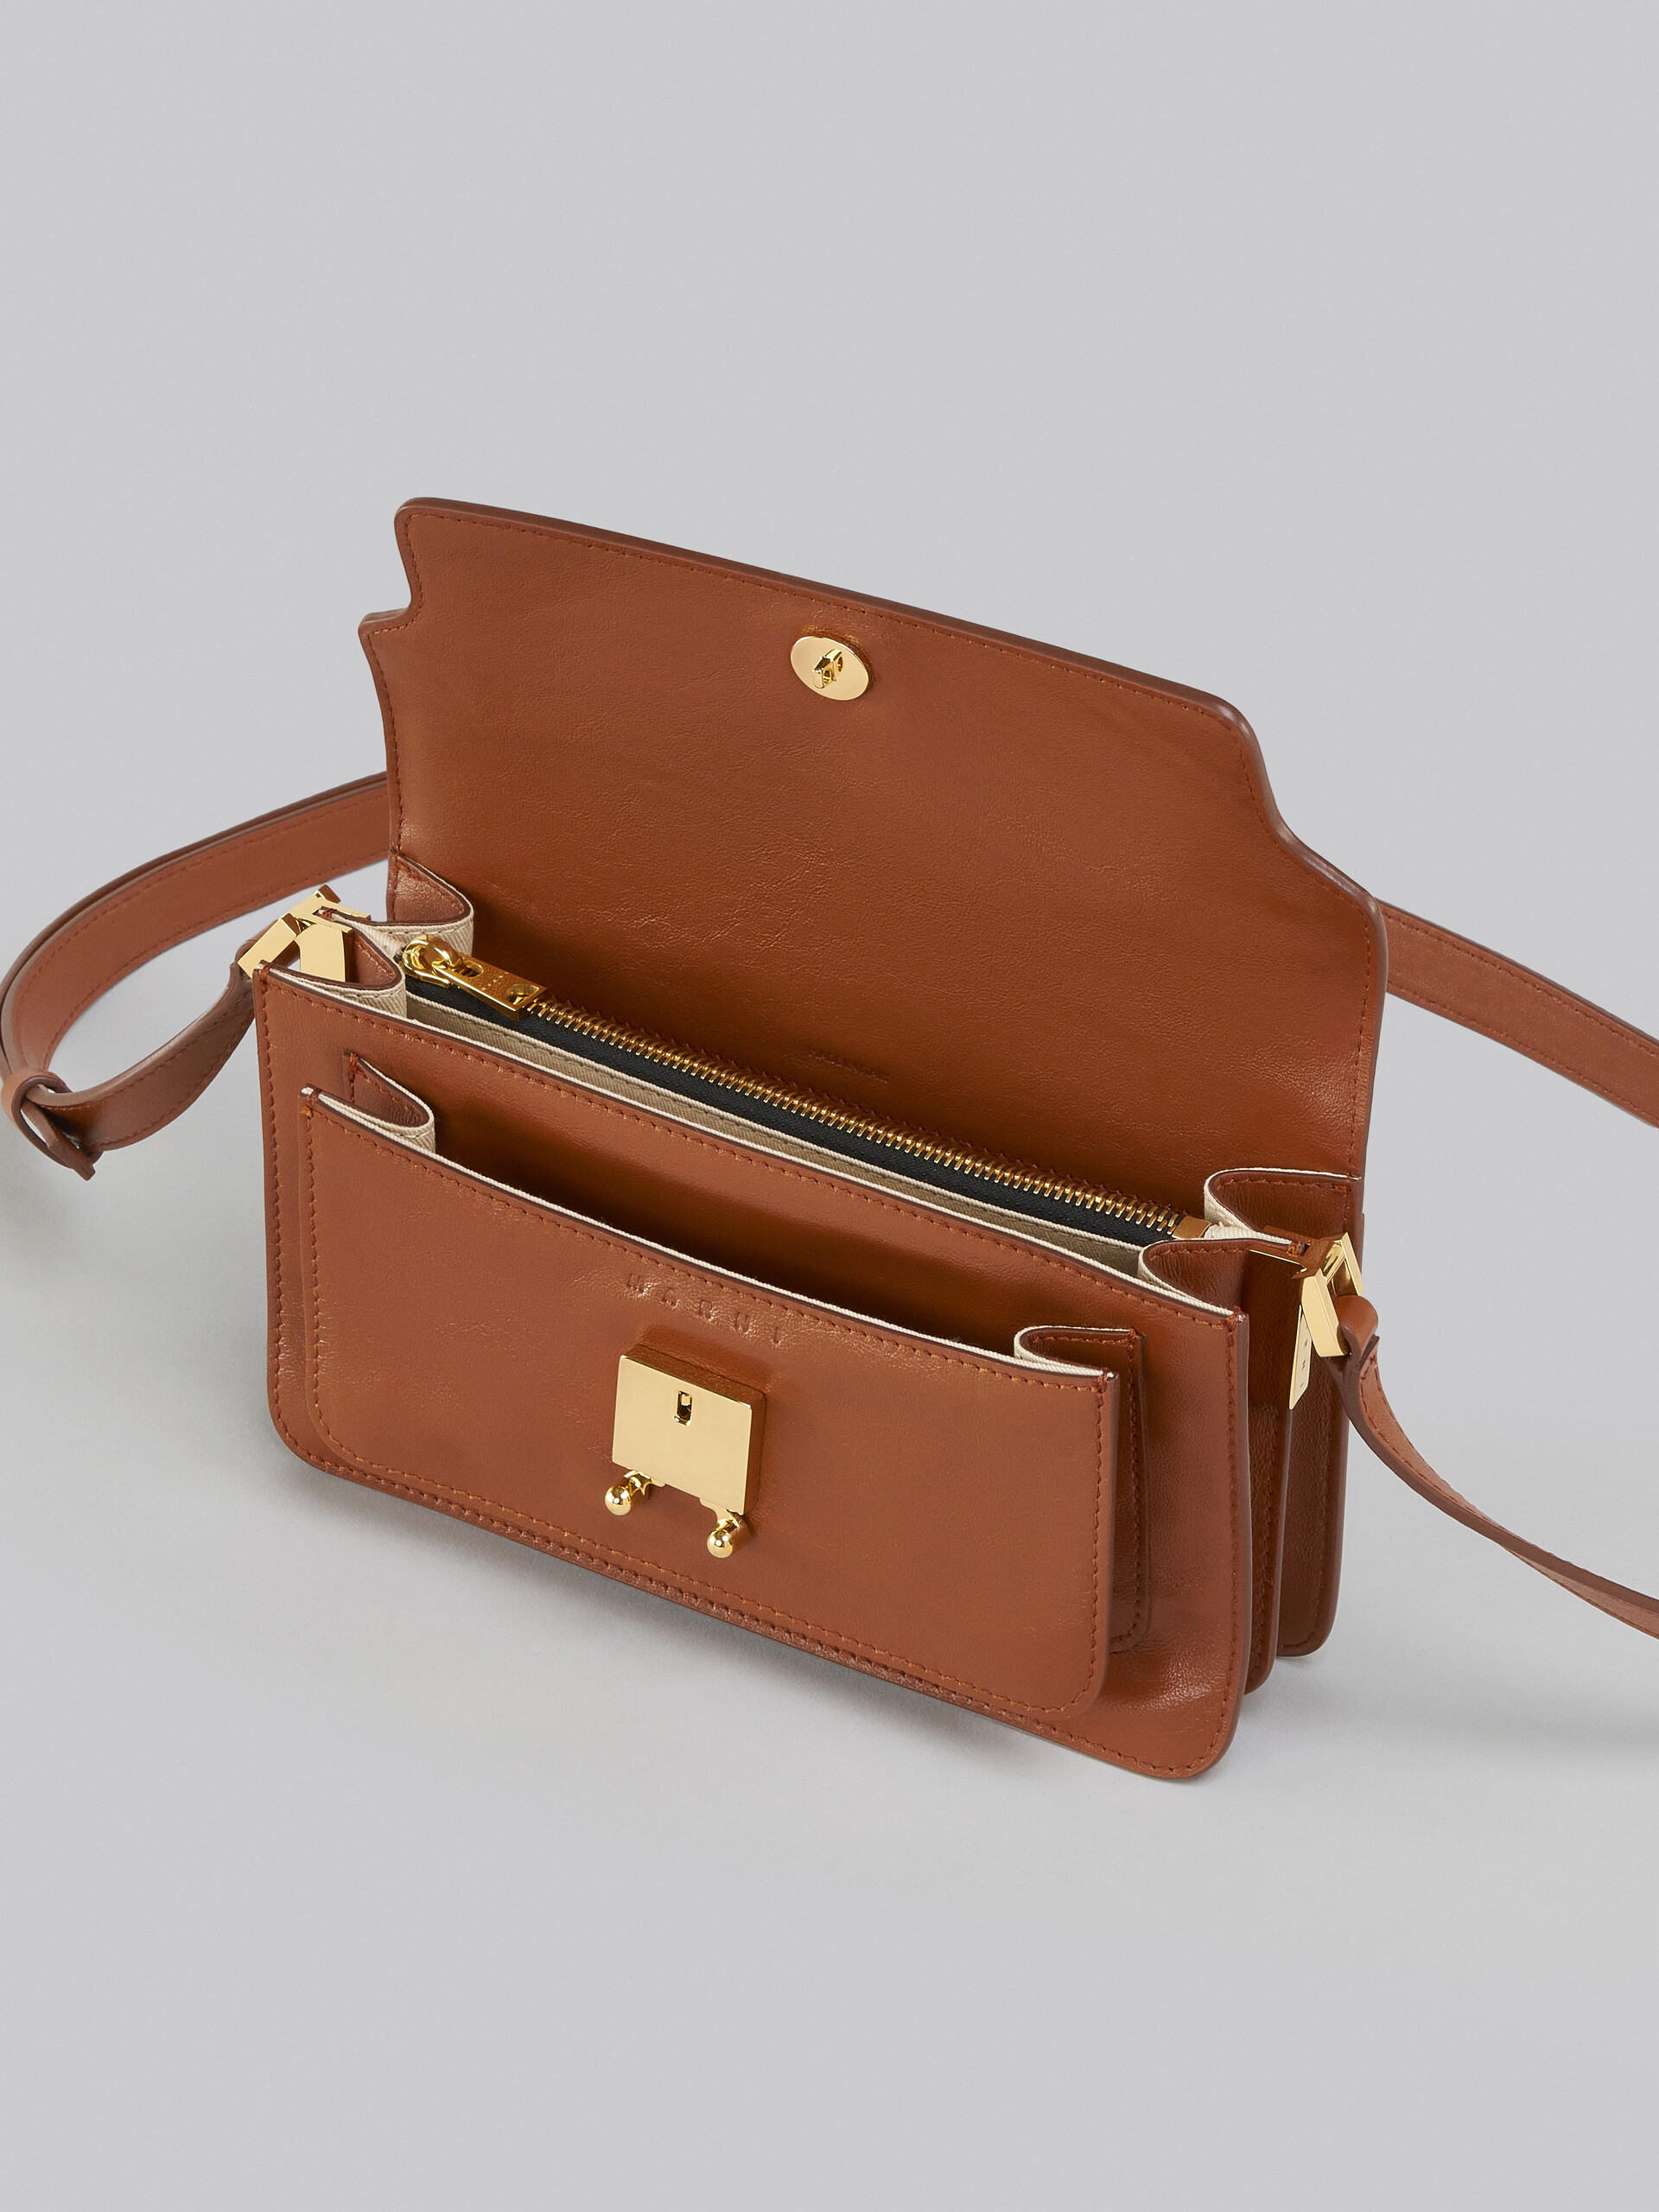 Marni - Trunk Soft Large Bag in Brown Leather - Shoulder Bags - Man